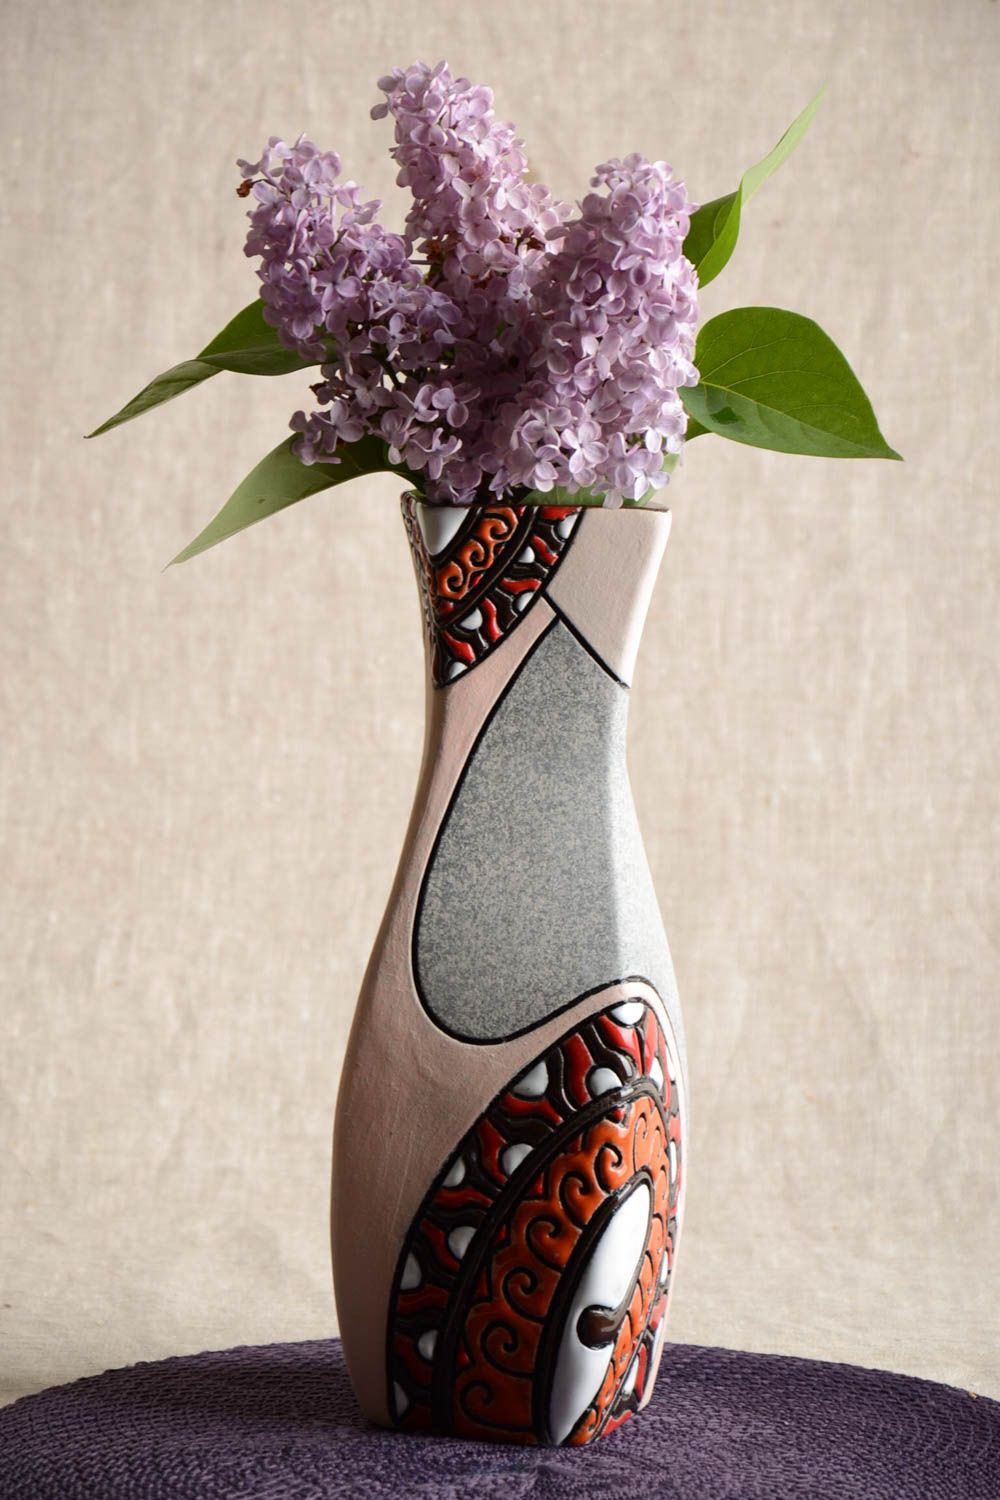 40 oz ceramic handmade square tube vase 12 inches tall for home décor 2 lb photo 1